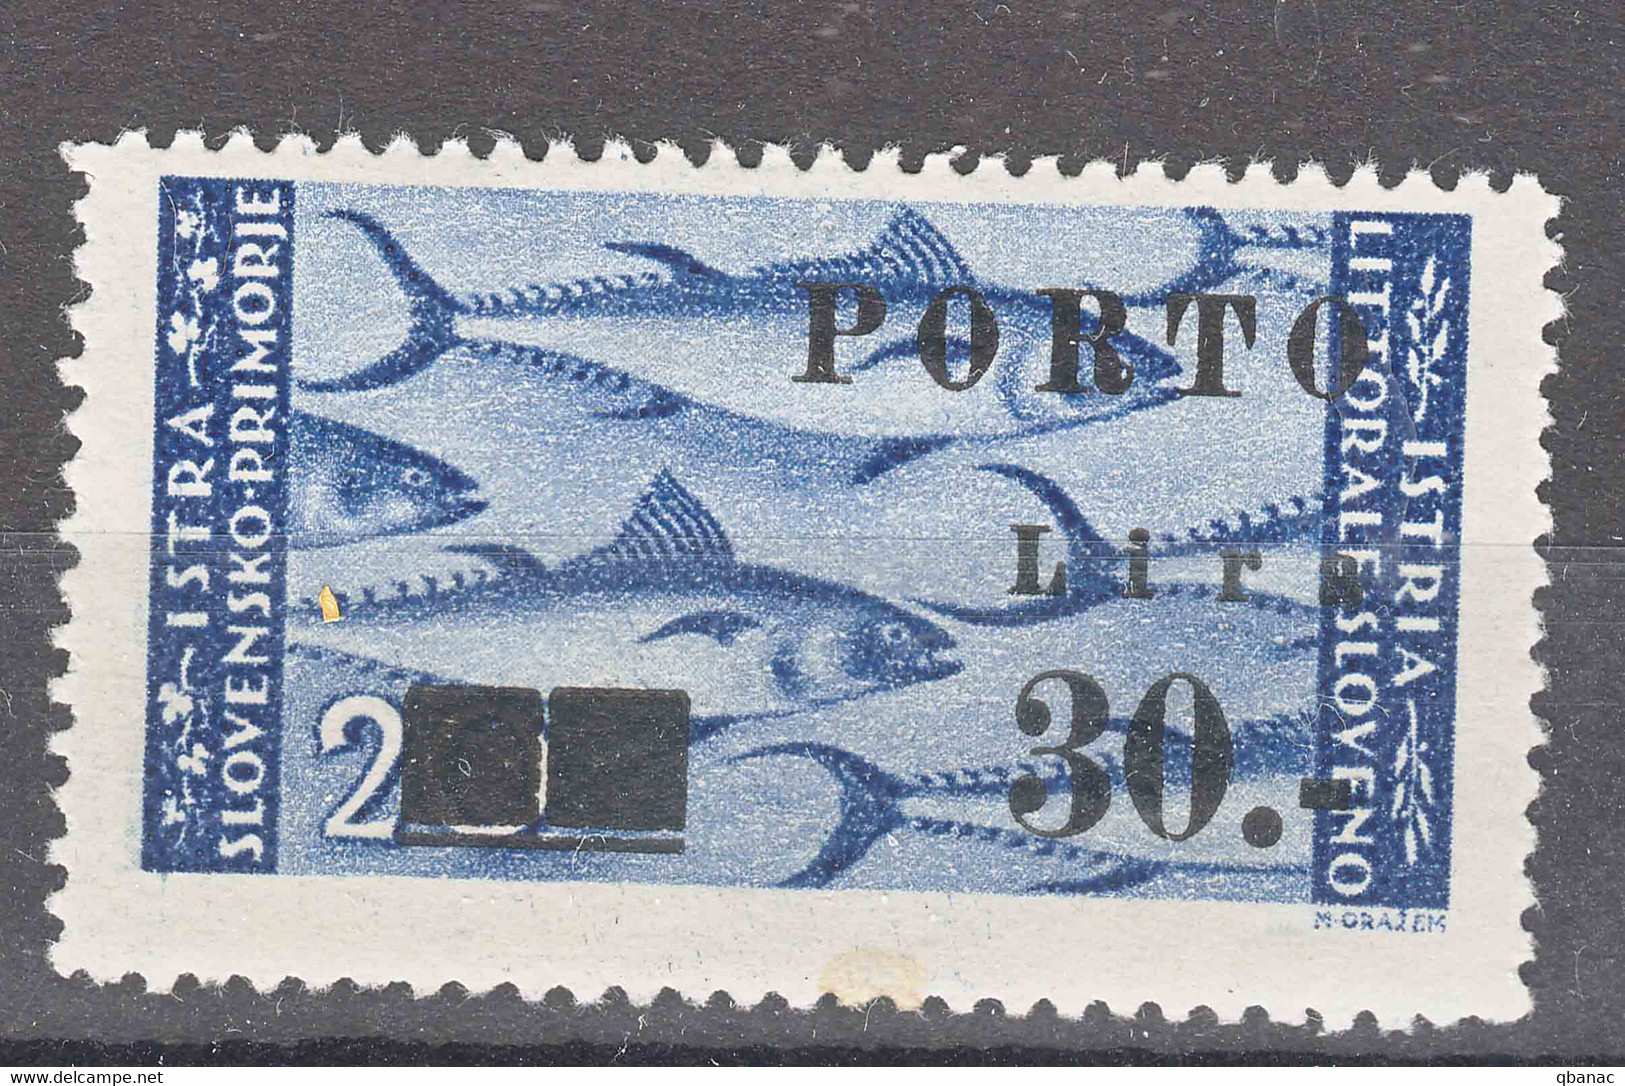 Istria Litorale Yugoslavia Occupation, Porto 1946 Sassone#19 Overprint II, Mint Hinged - Yugoslavian Occ.: Istria